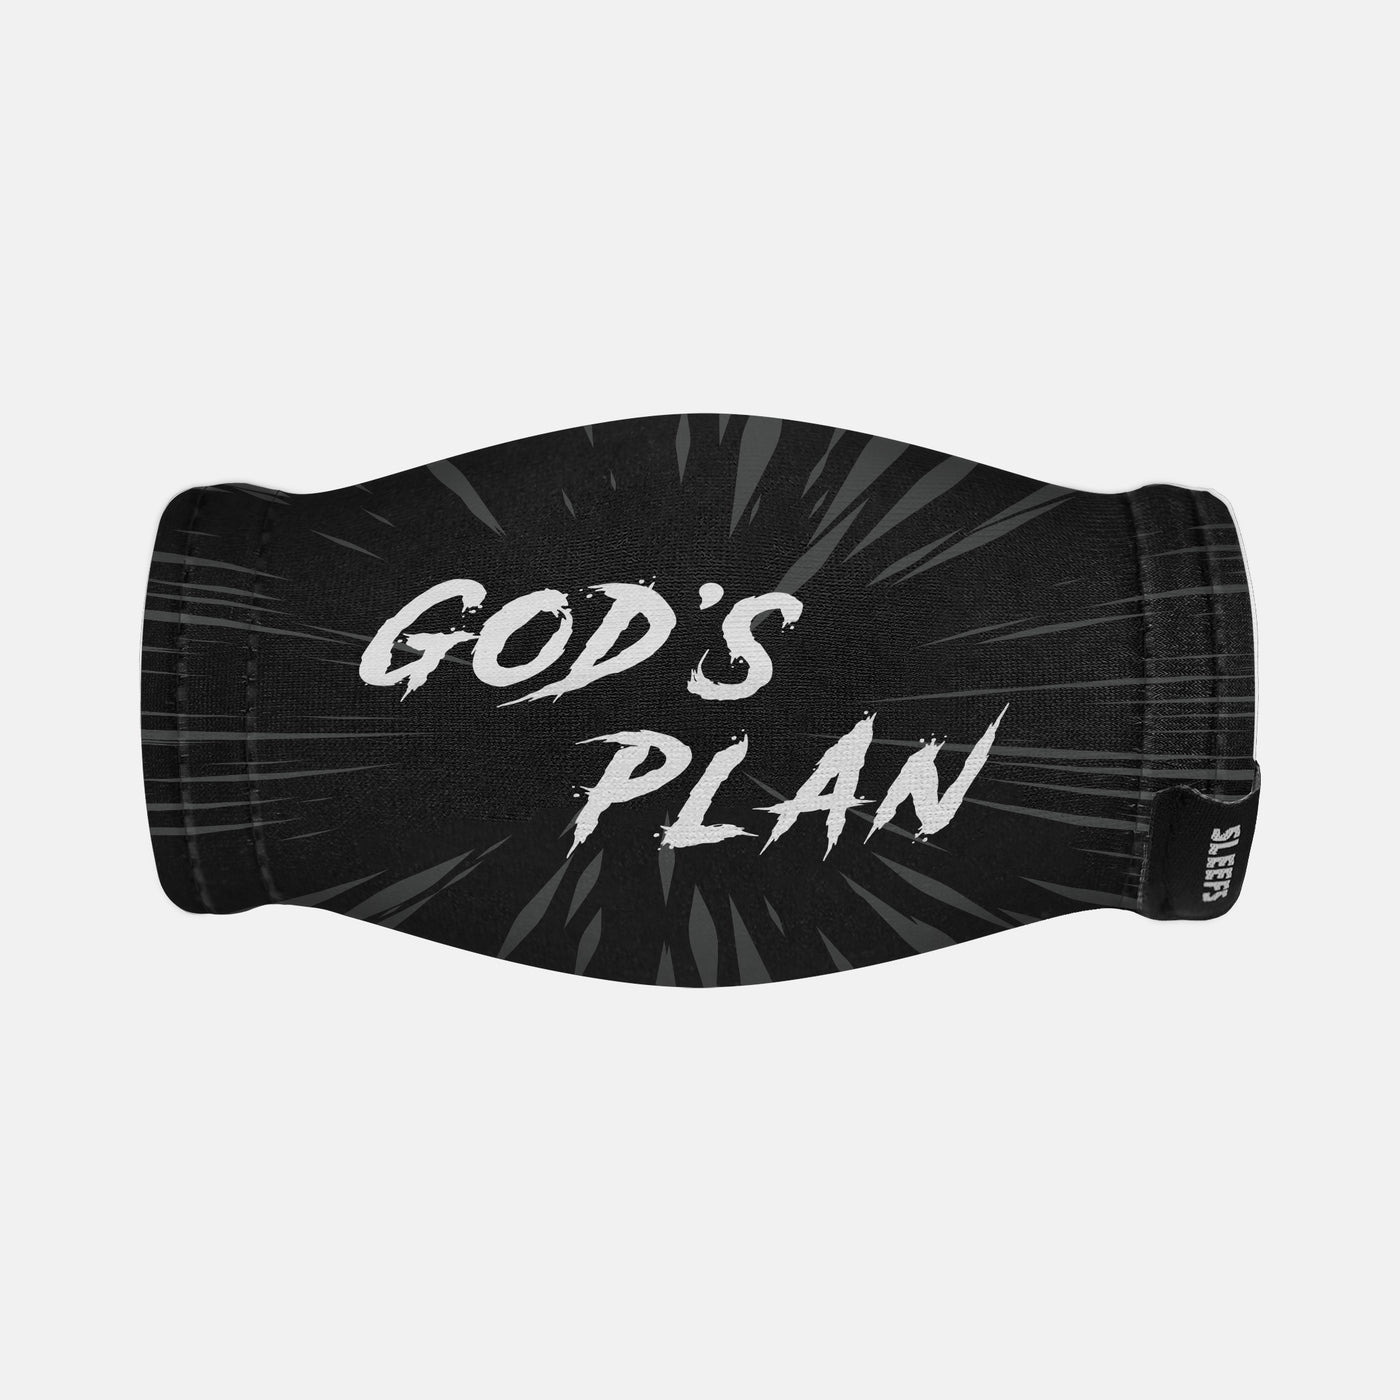 God's Plan Black Chin Strap Cover